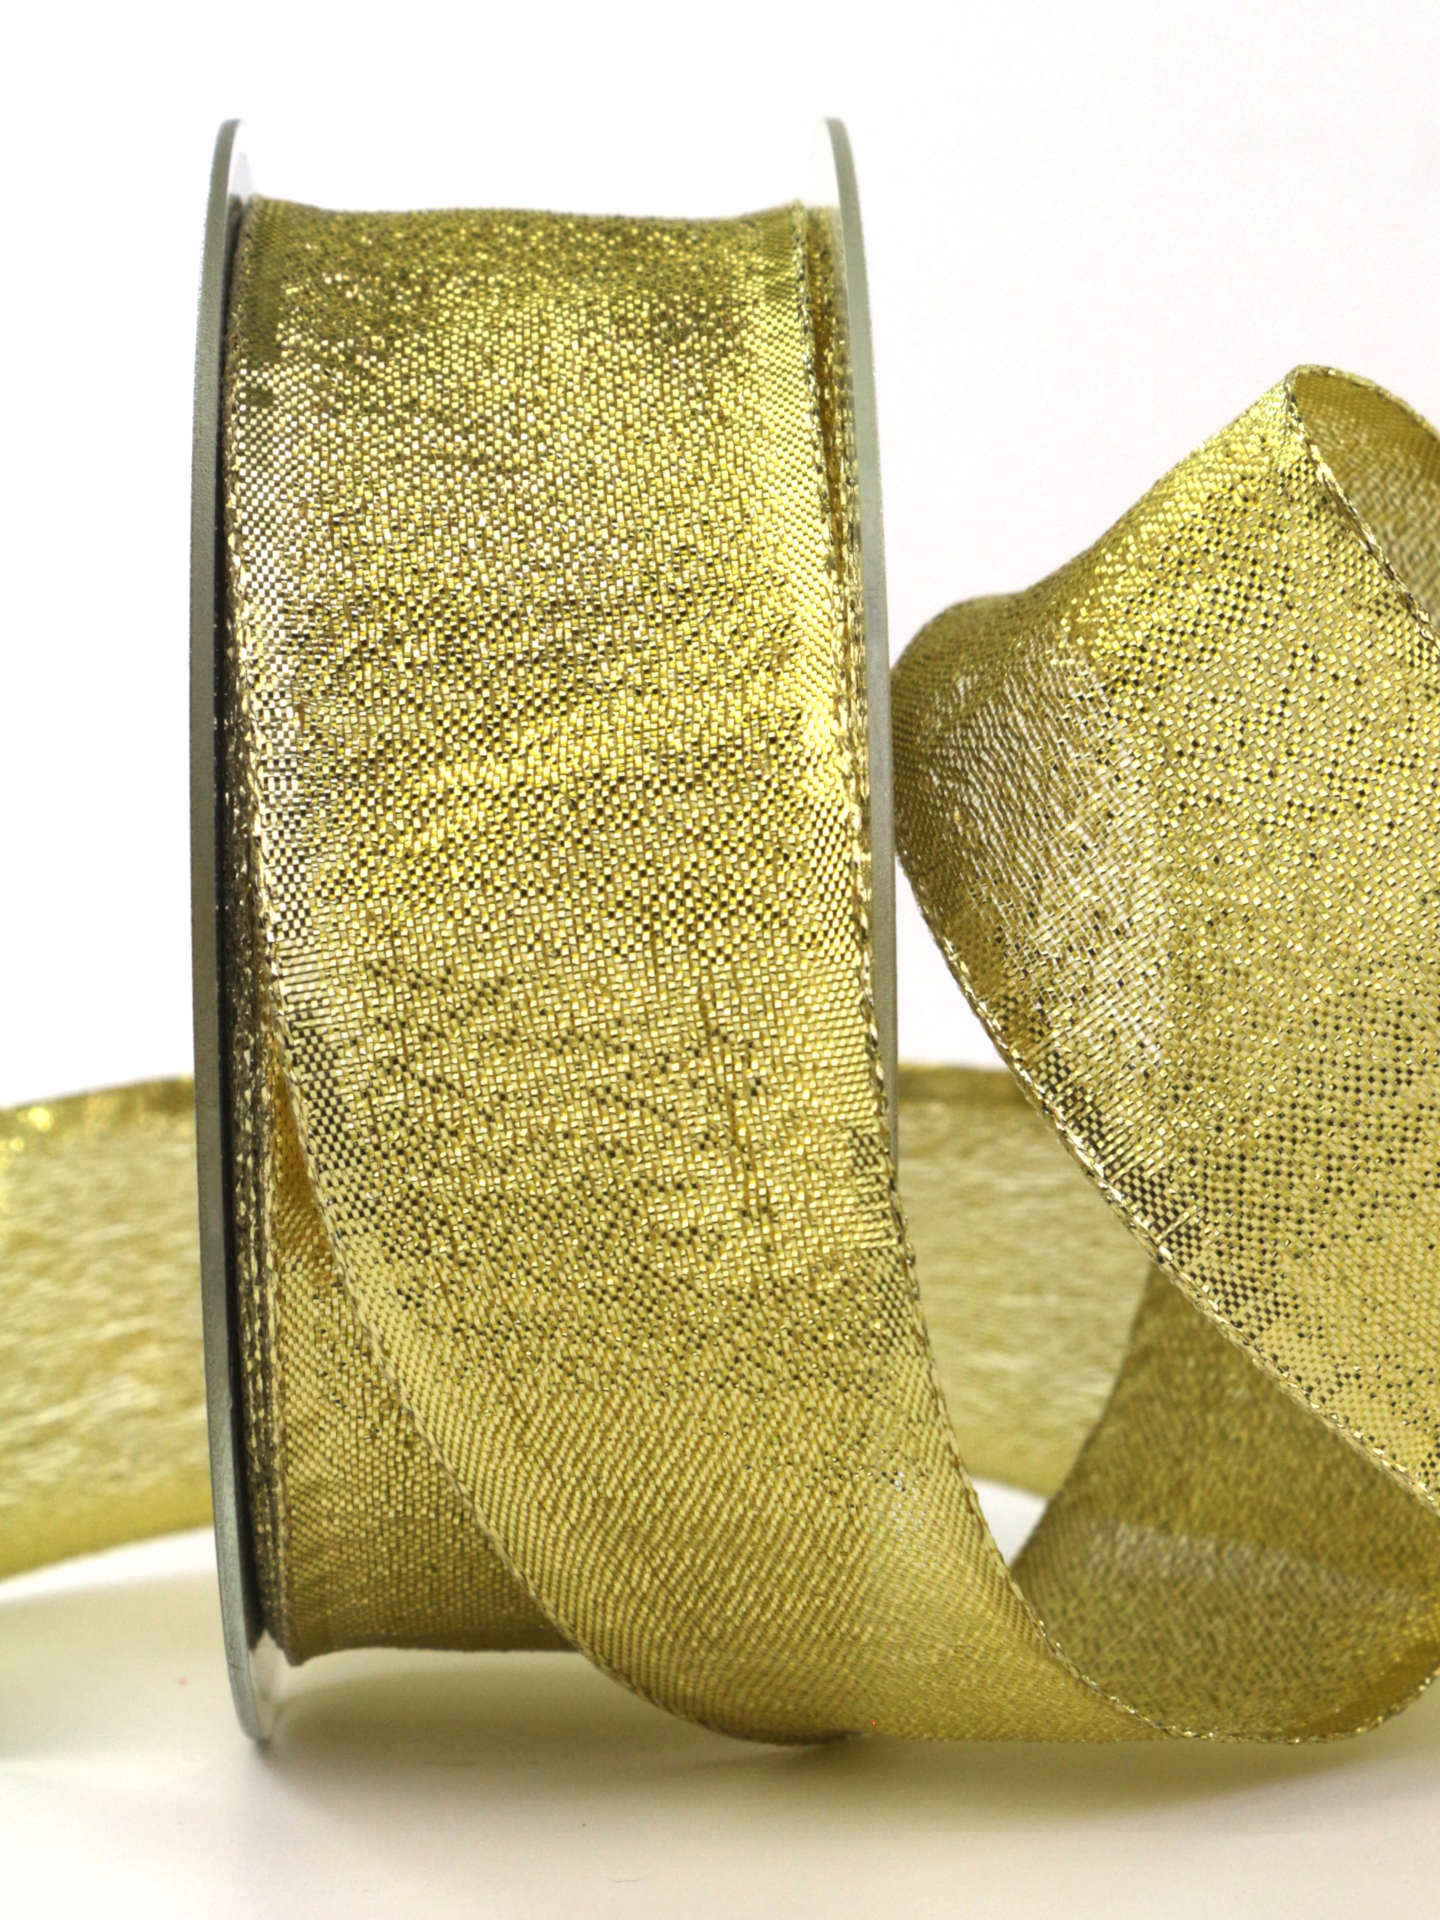 Goldband „Brokat“, gold, 40 mm breit, 25 m Rolle - geschenkband-weihnachten, weihnachtsbaender, geschenkband-weihnachten-dauersortiment, weihnachtsband